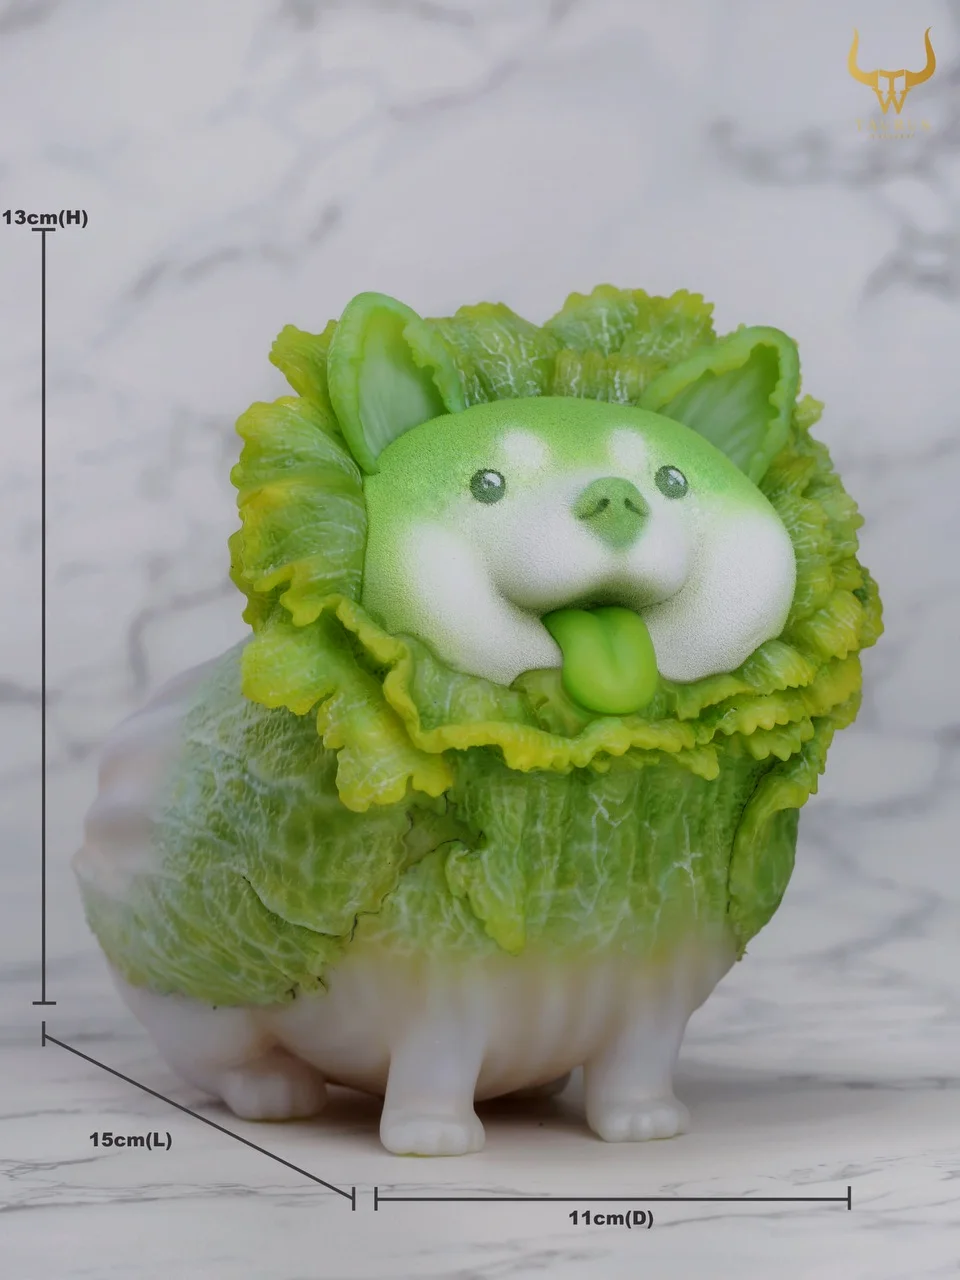 Taurus workshop x ぽん吉 - 野菜精灵白菜犬
产品样品涂装、雕塑监督